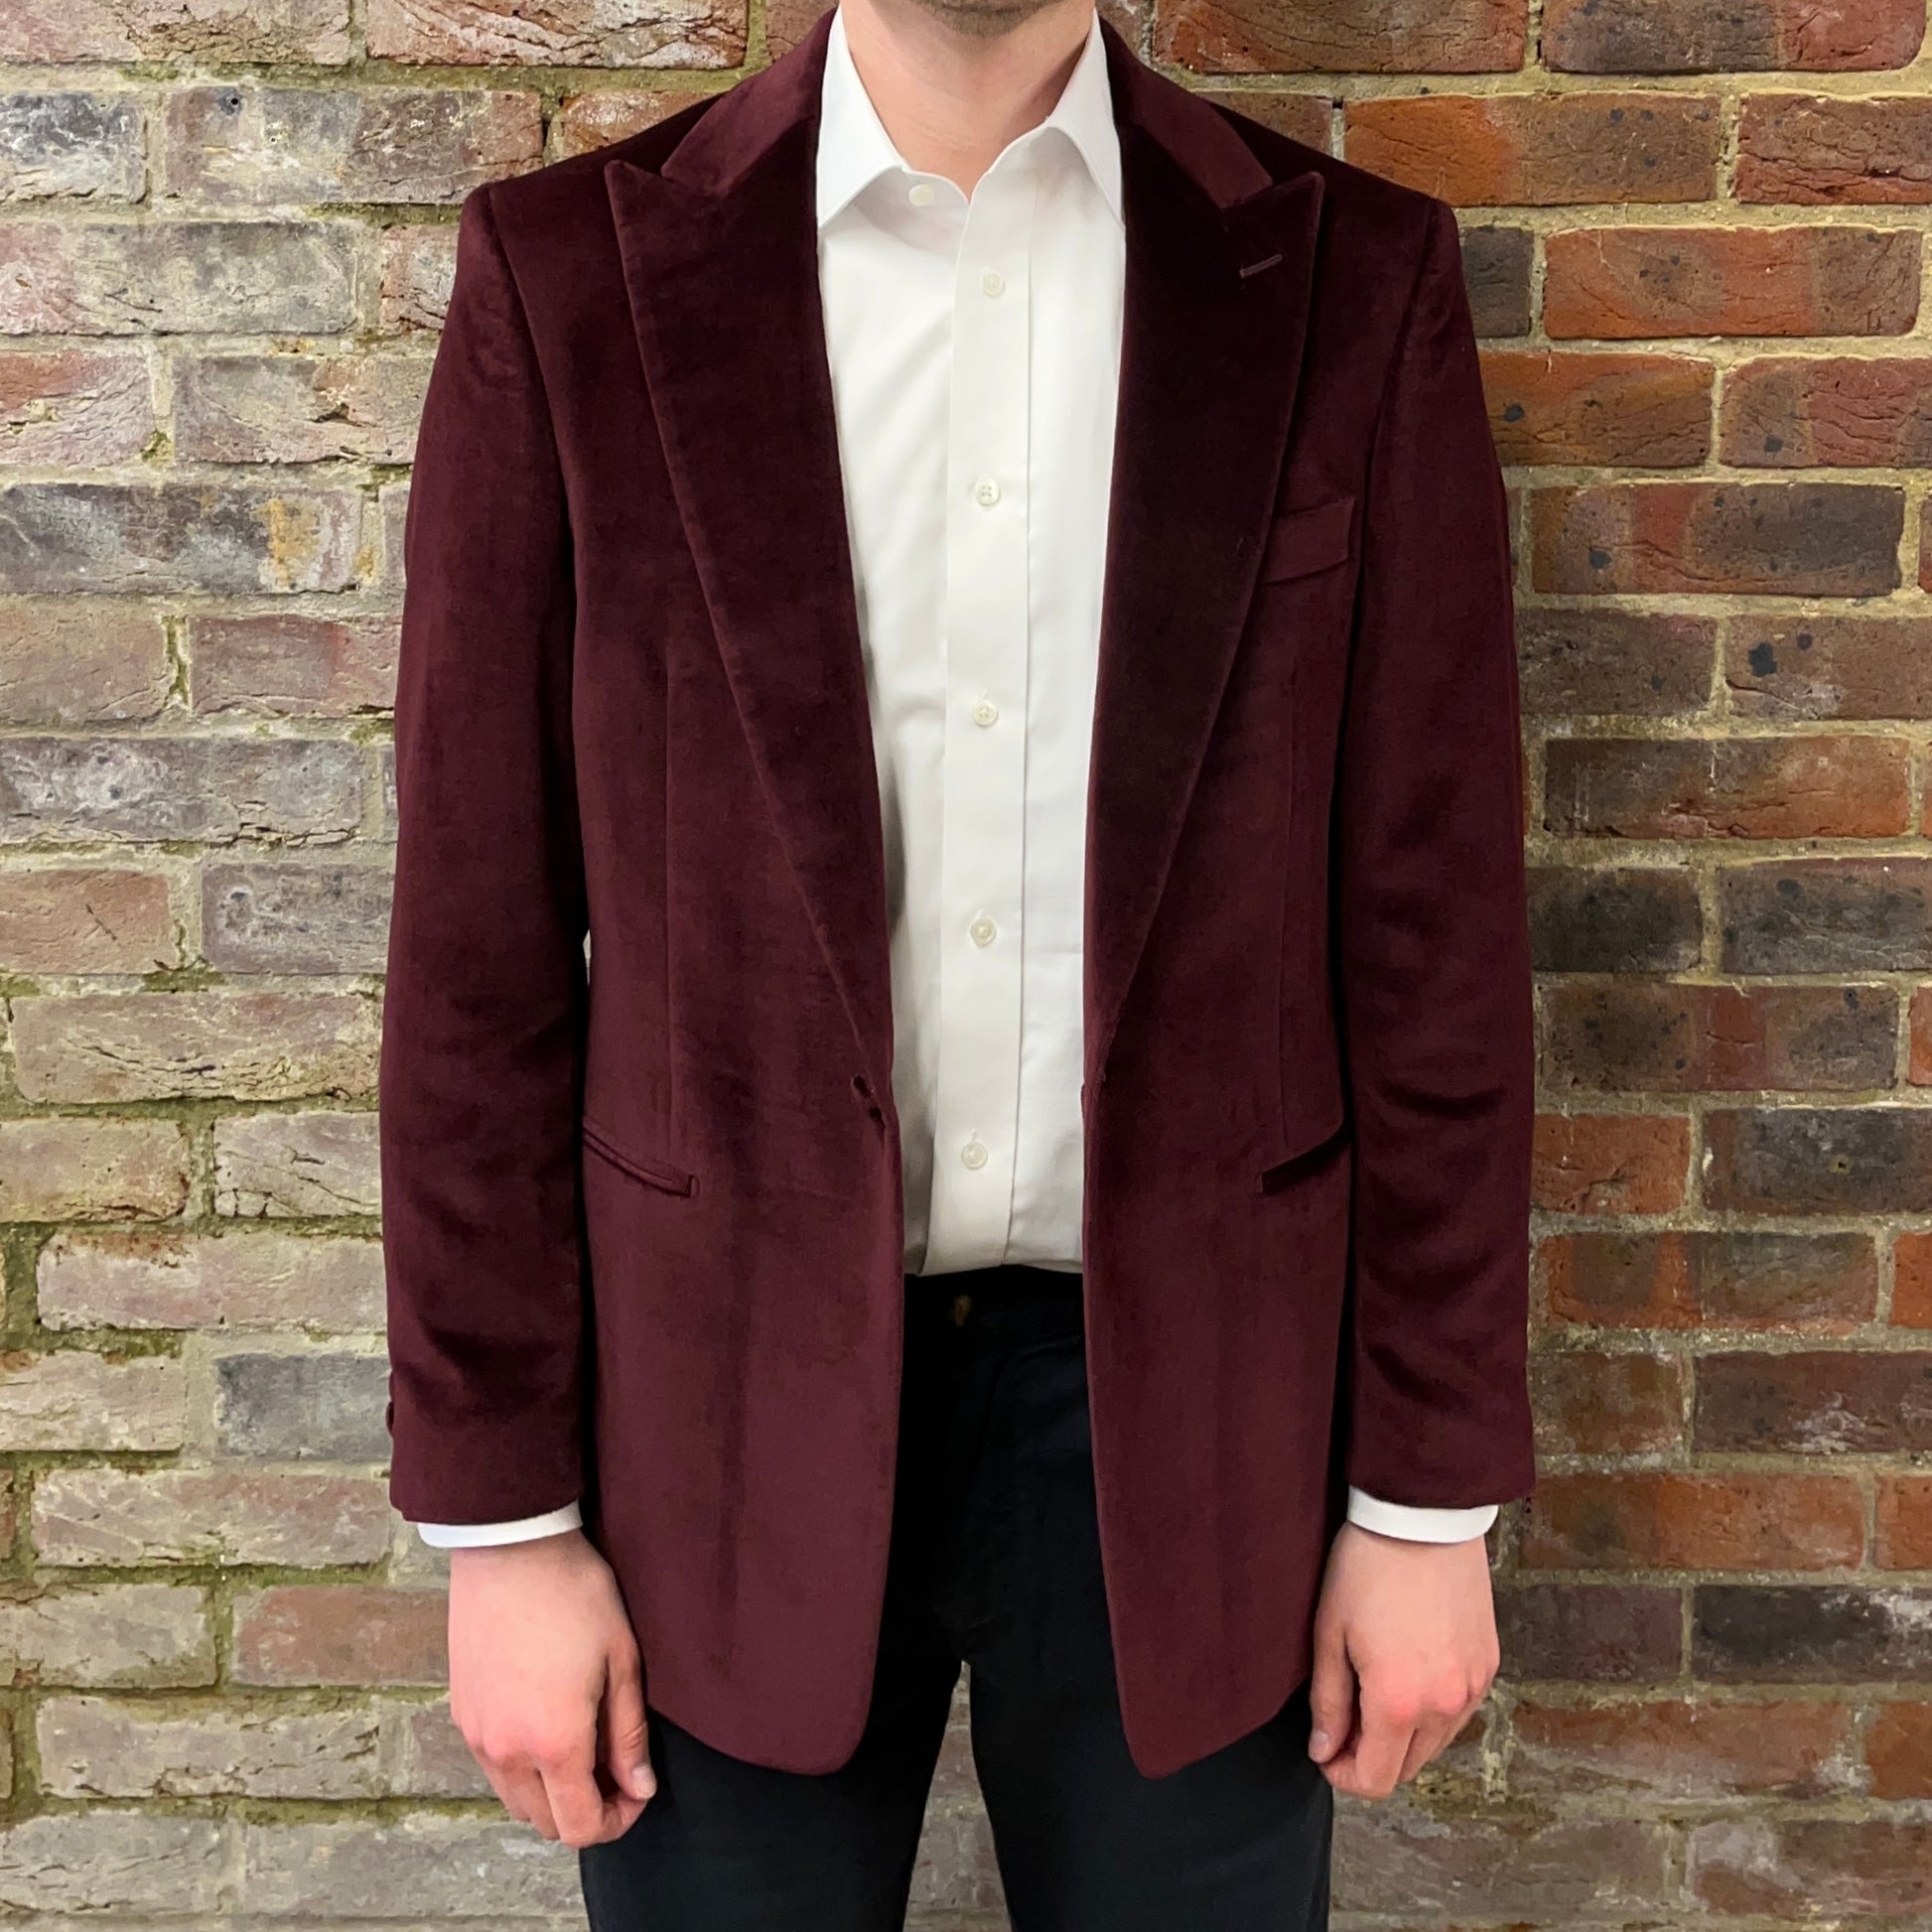 Regent burgundy velvet smoking jacket